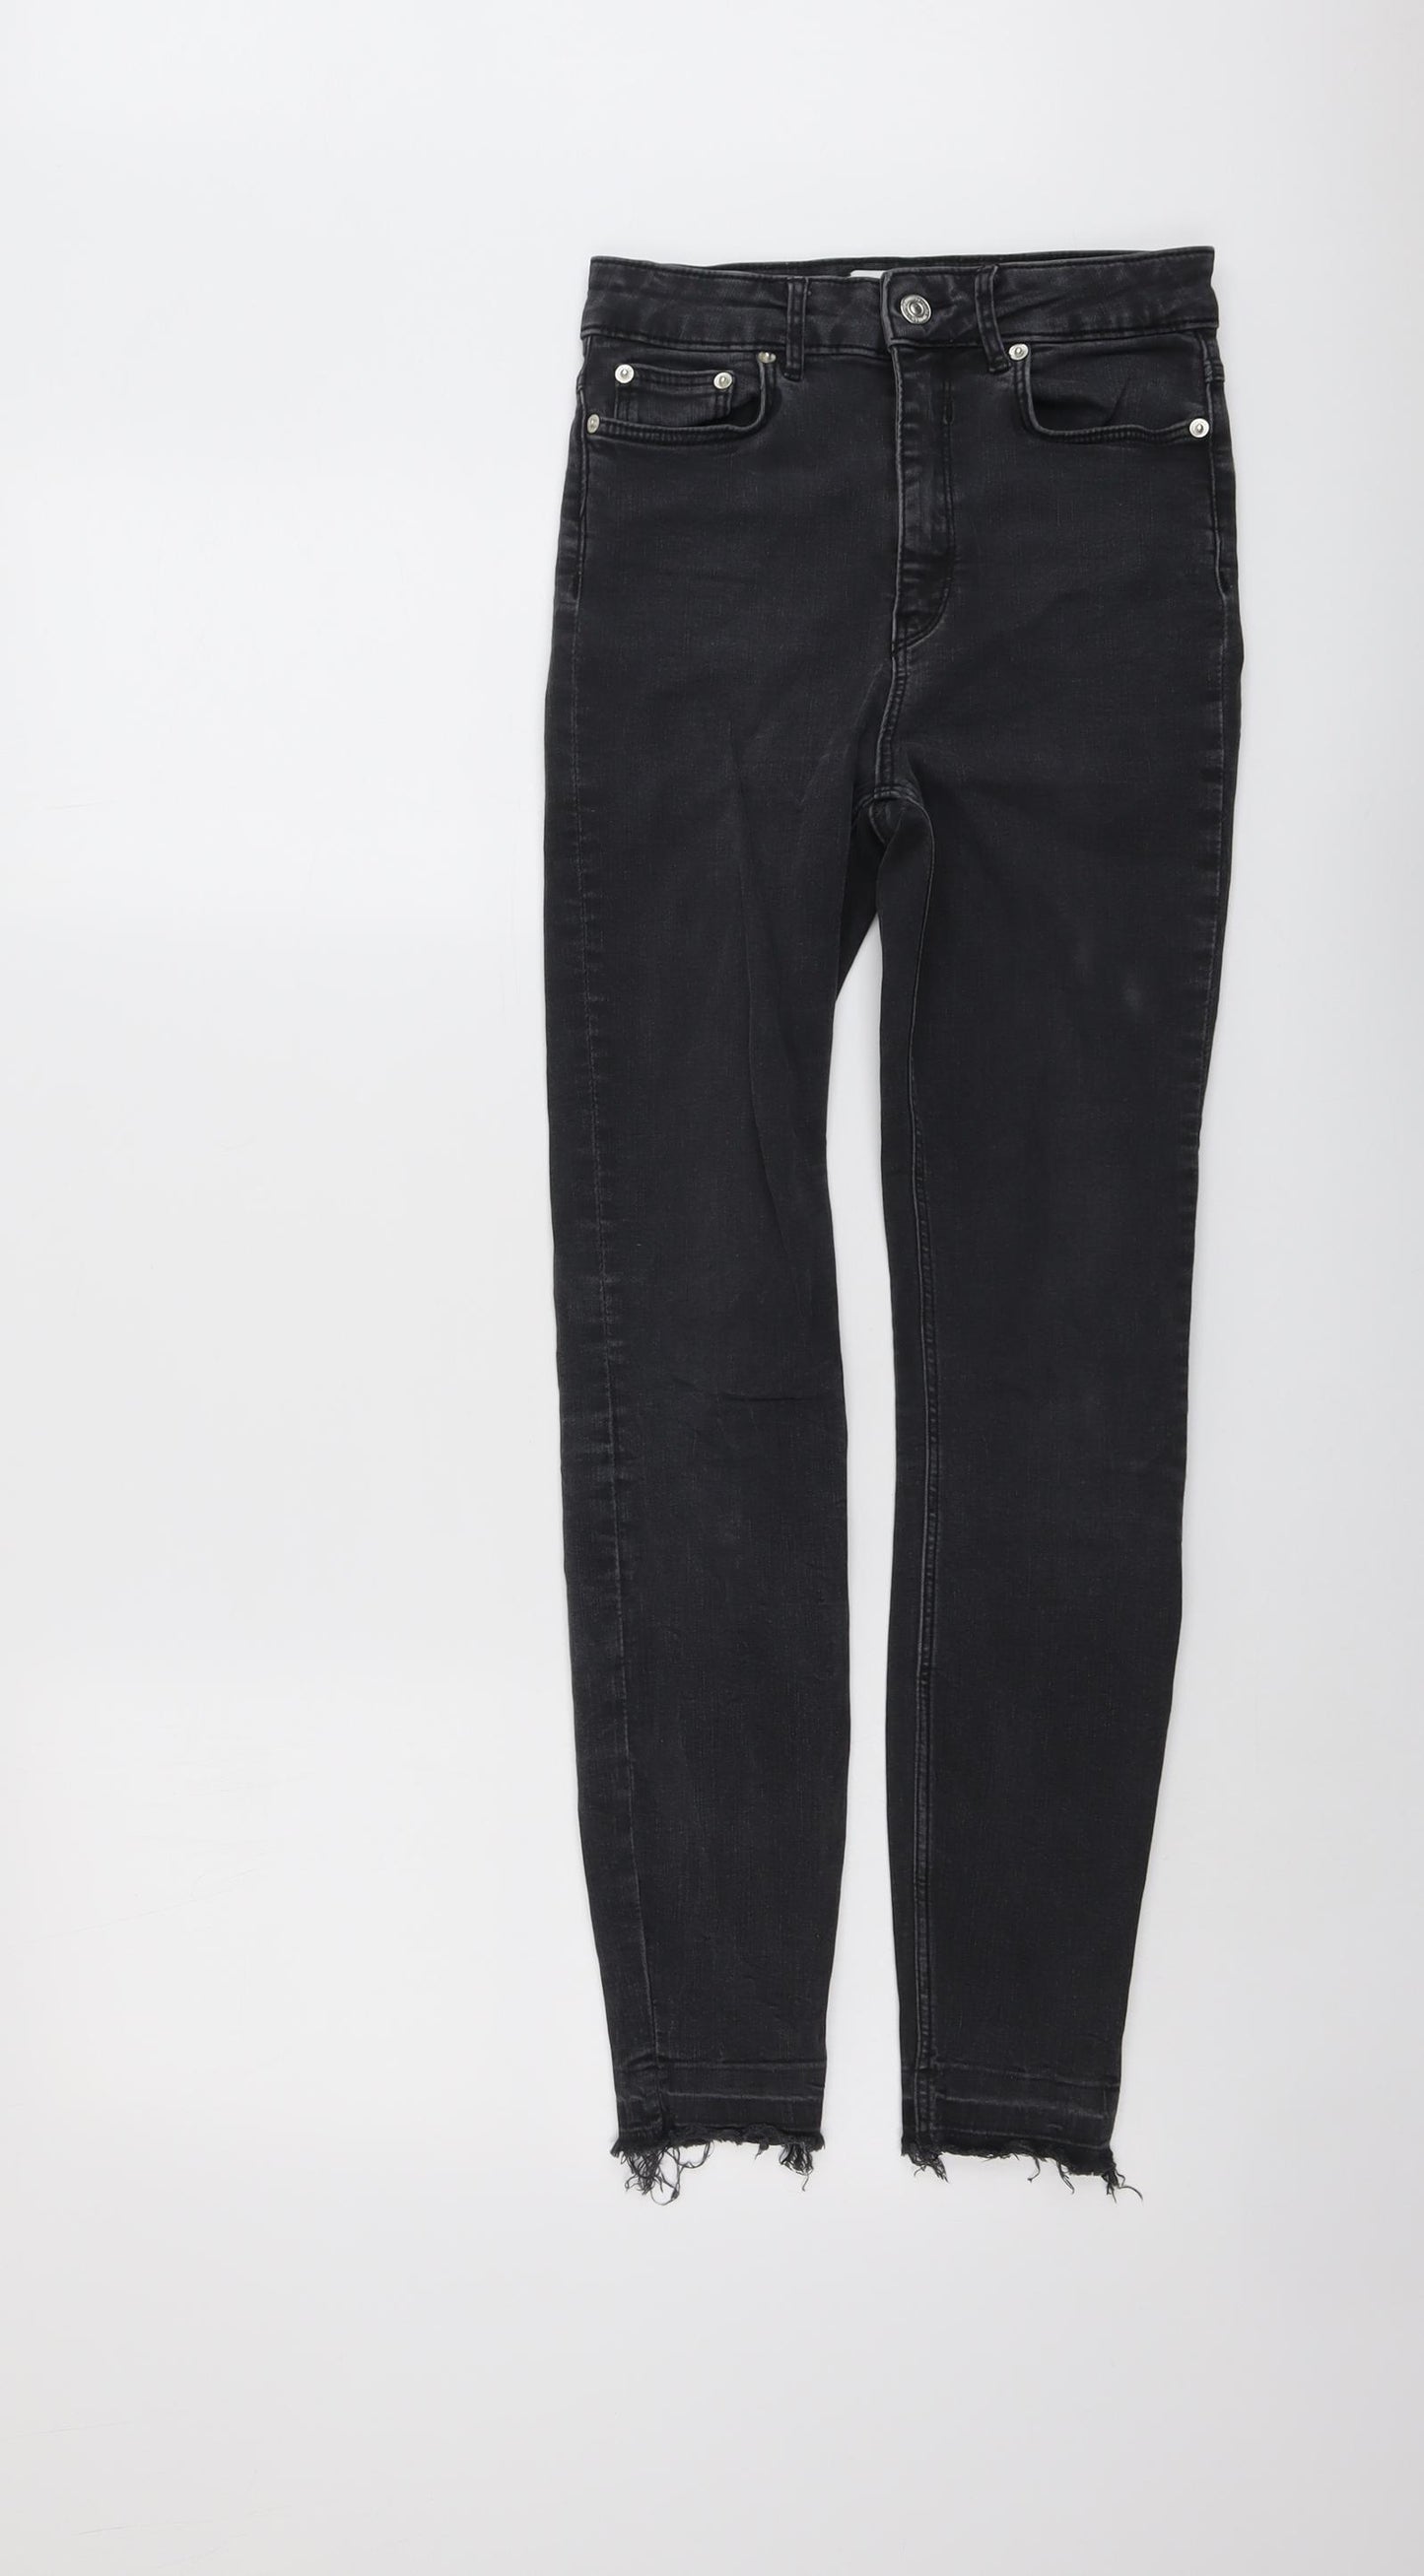 Zara Womens Grey Cotton Skinny Jeans Size 6 L27 in Regular Button